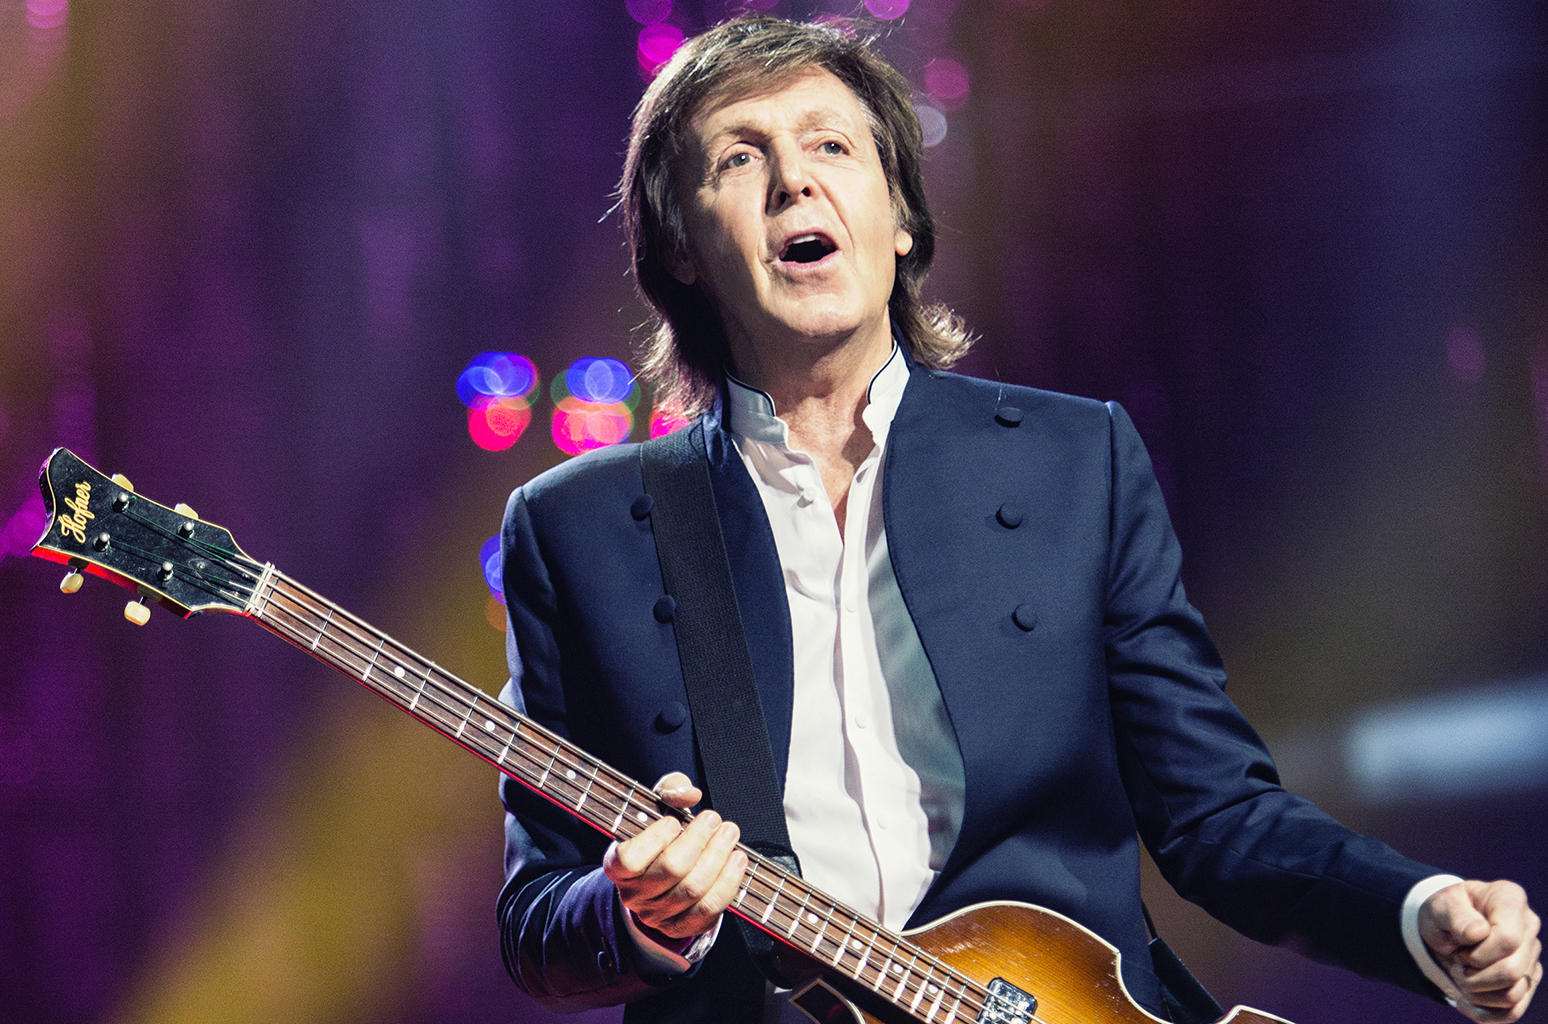 Paul McCartney comparte su nuevo tema “Get Enough”. Cusica Plus.